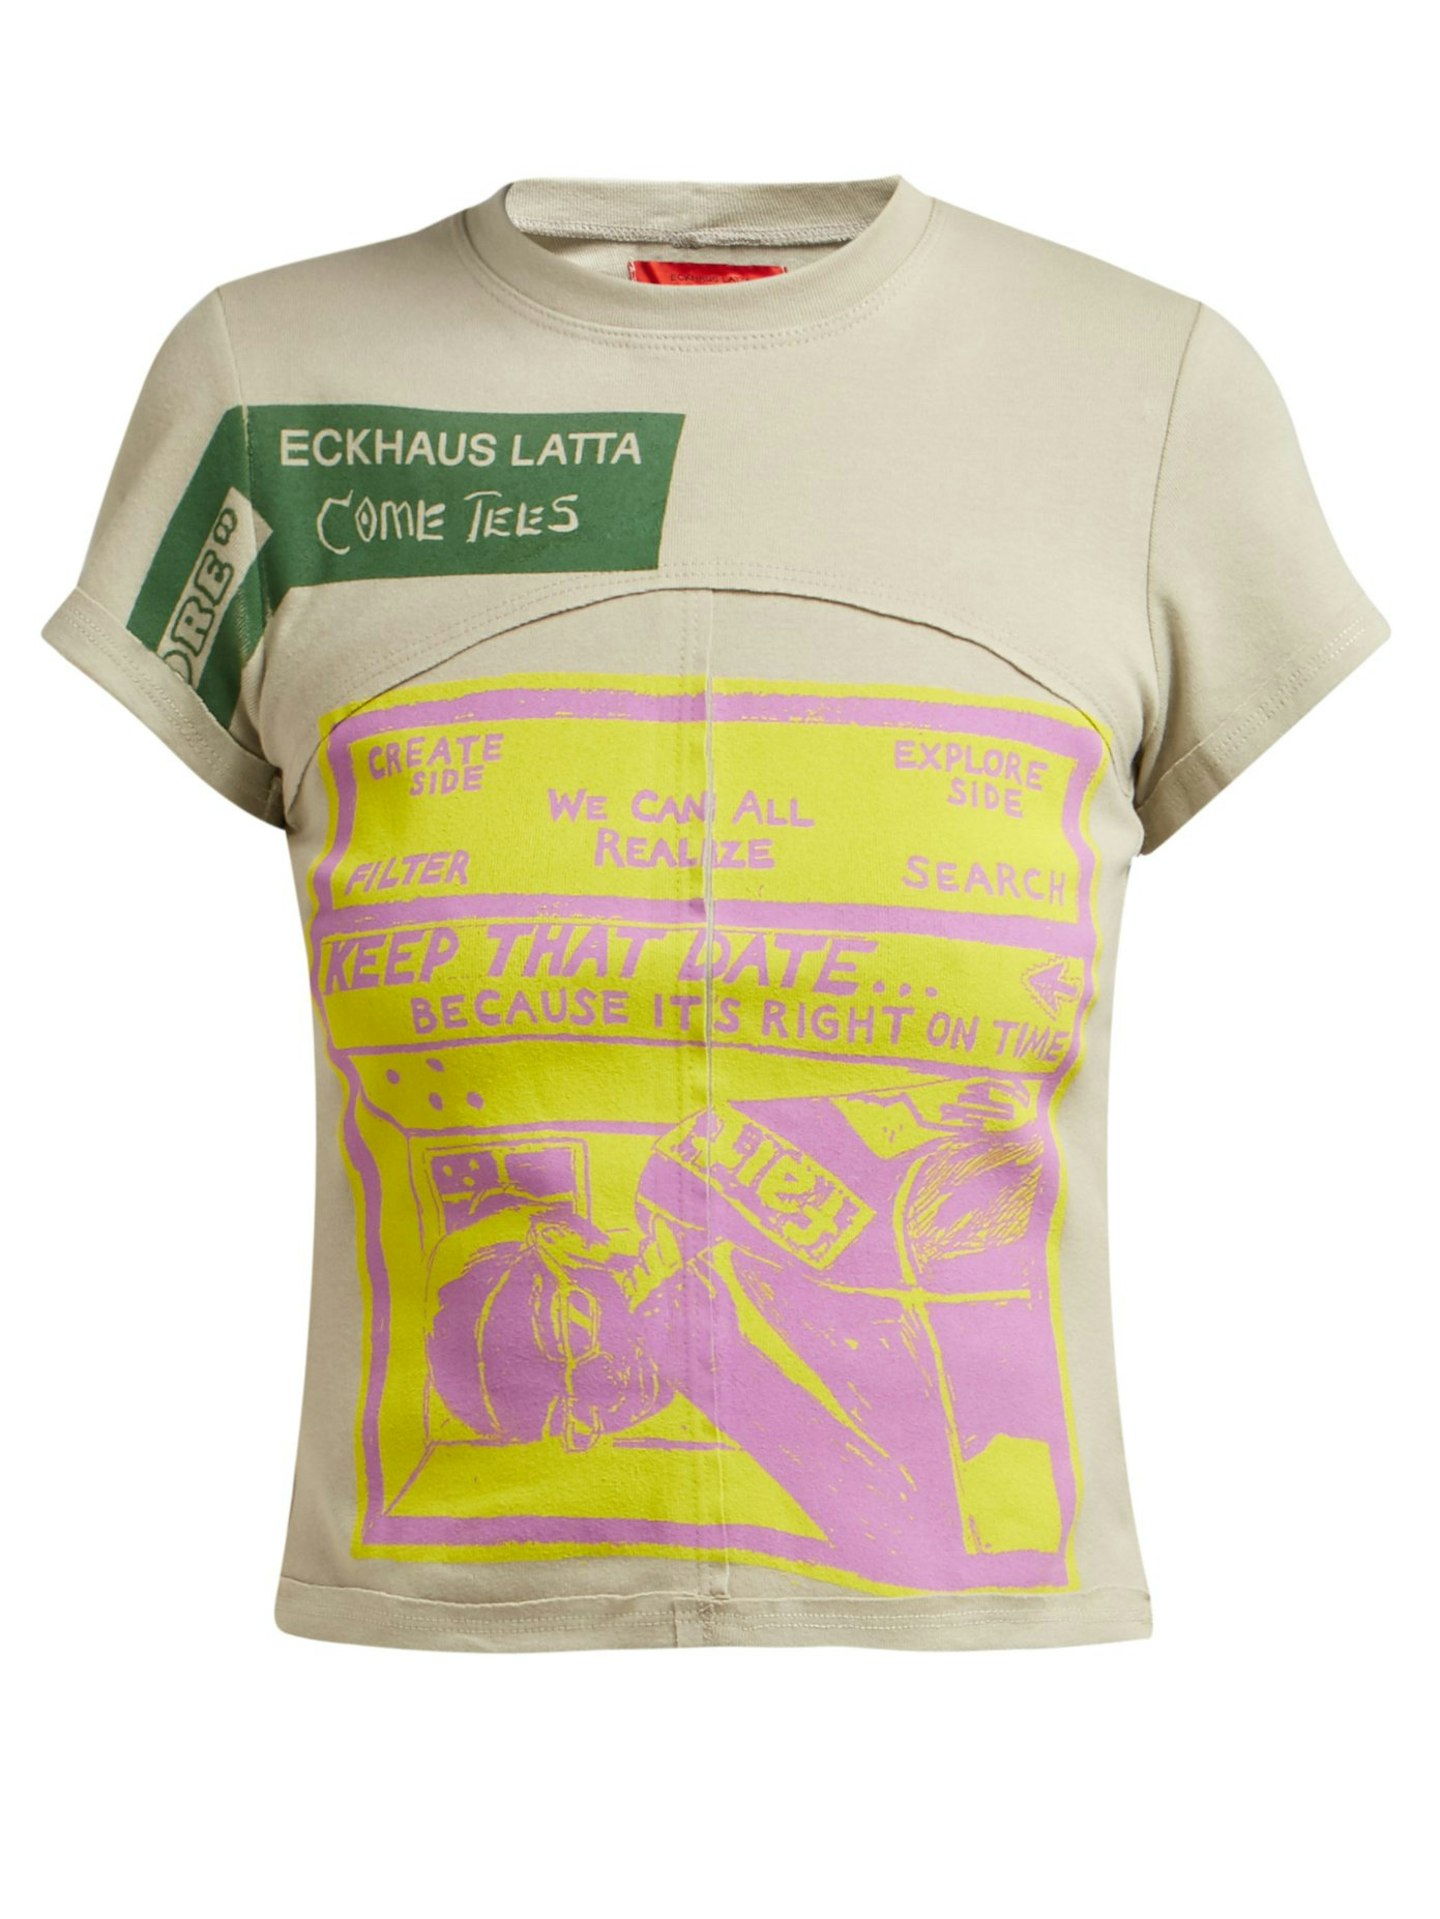 Eckhaus Latta, X Come Tees Lapped Baby Printed Cotton T-Shirt, £150, Matchesfashion.com